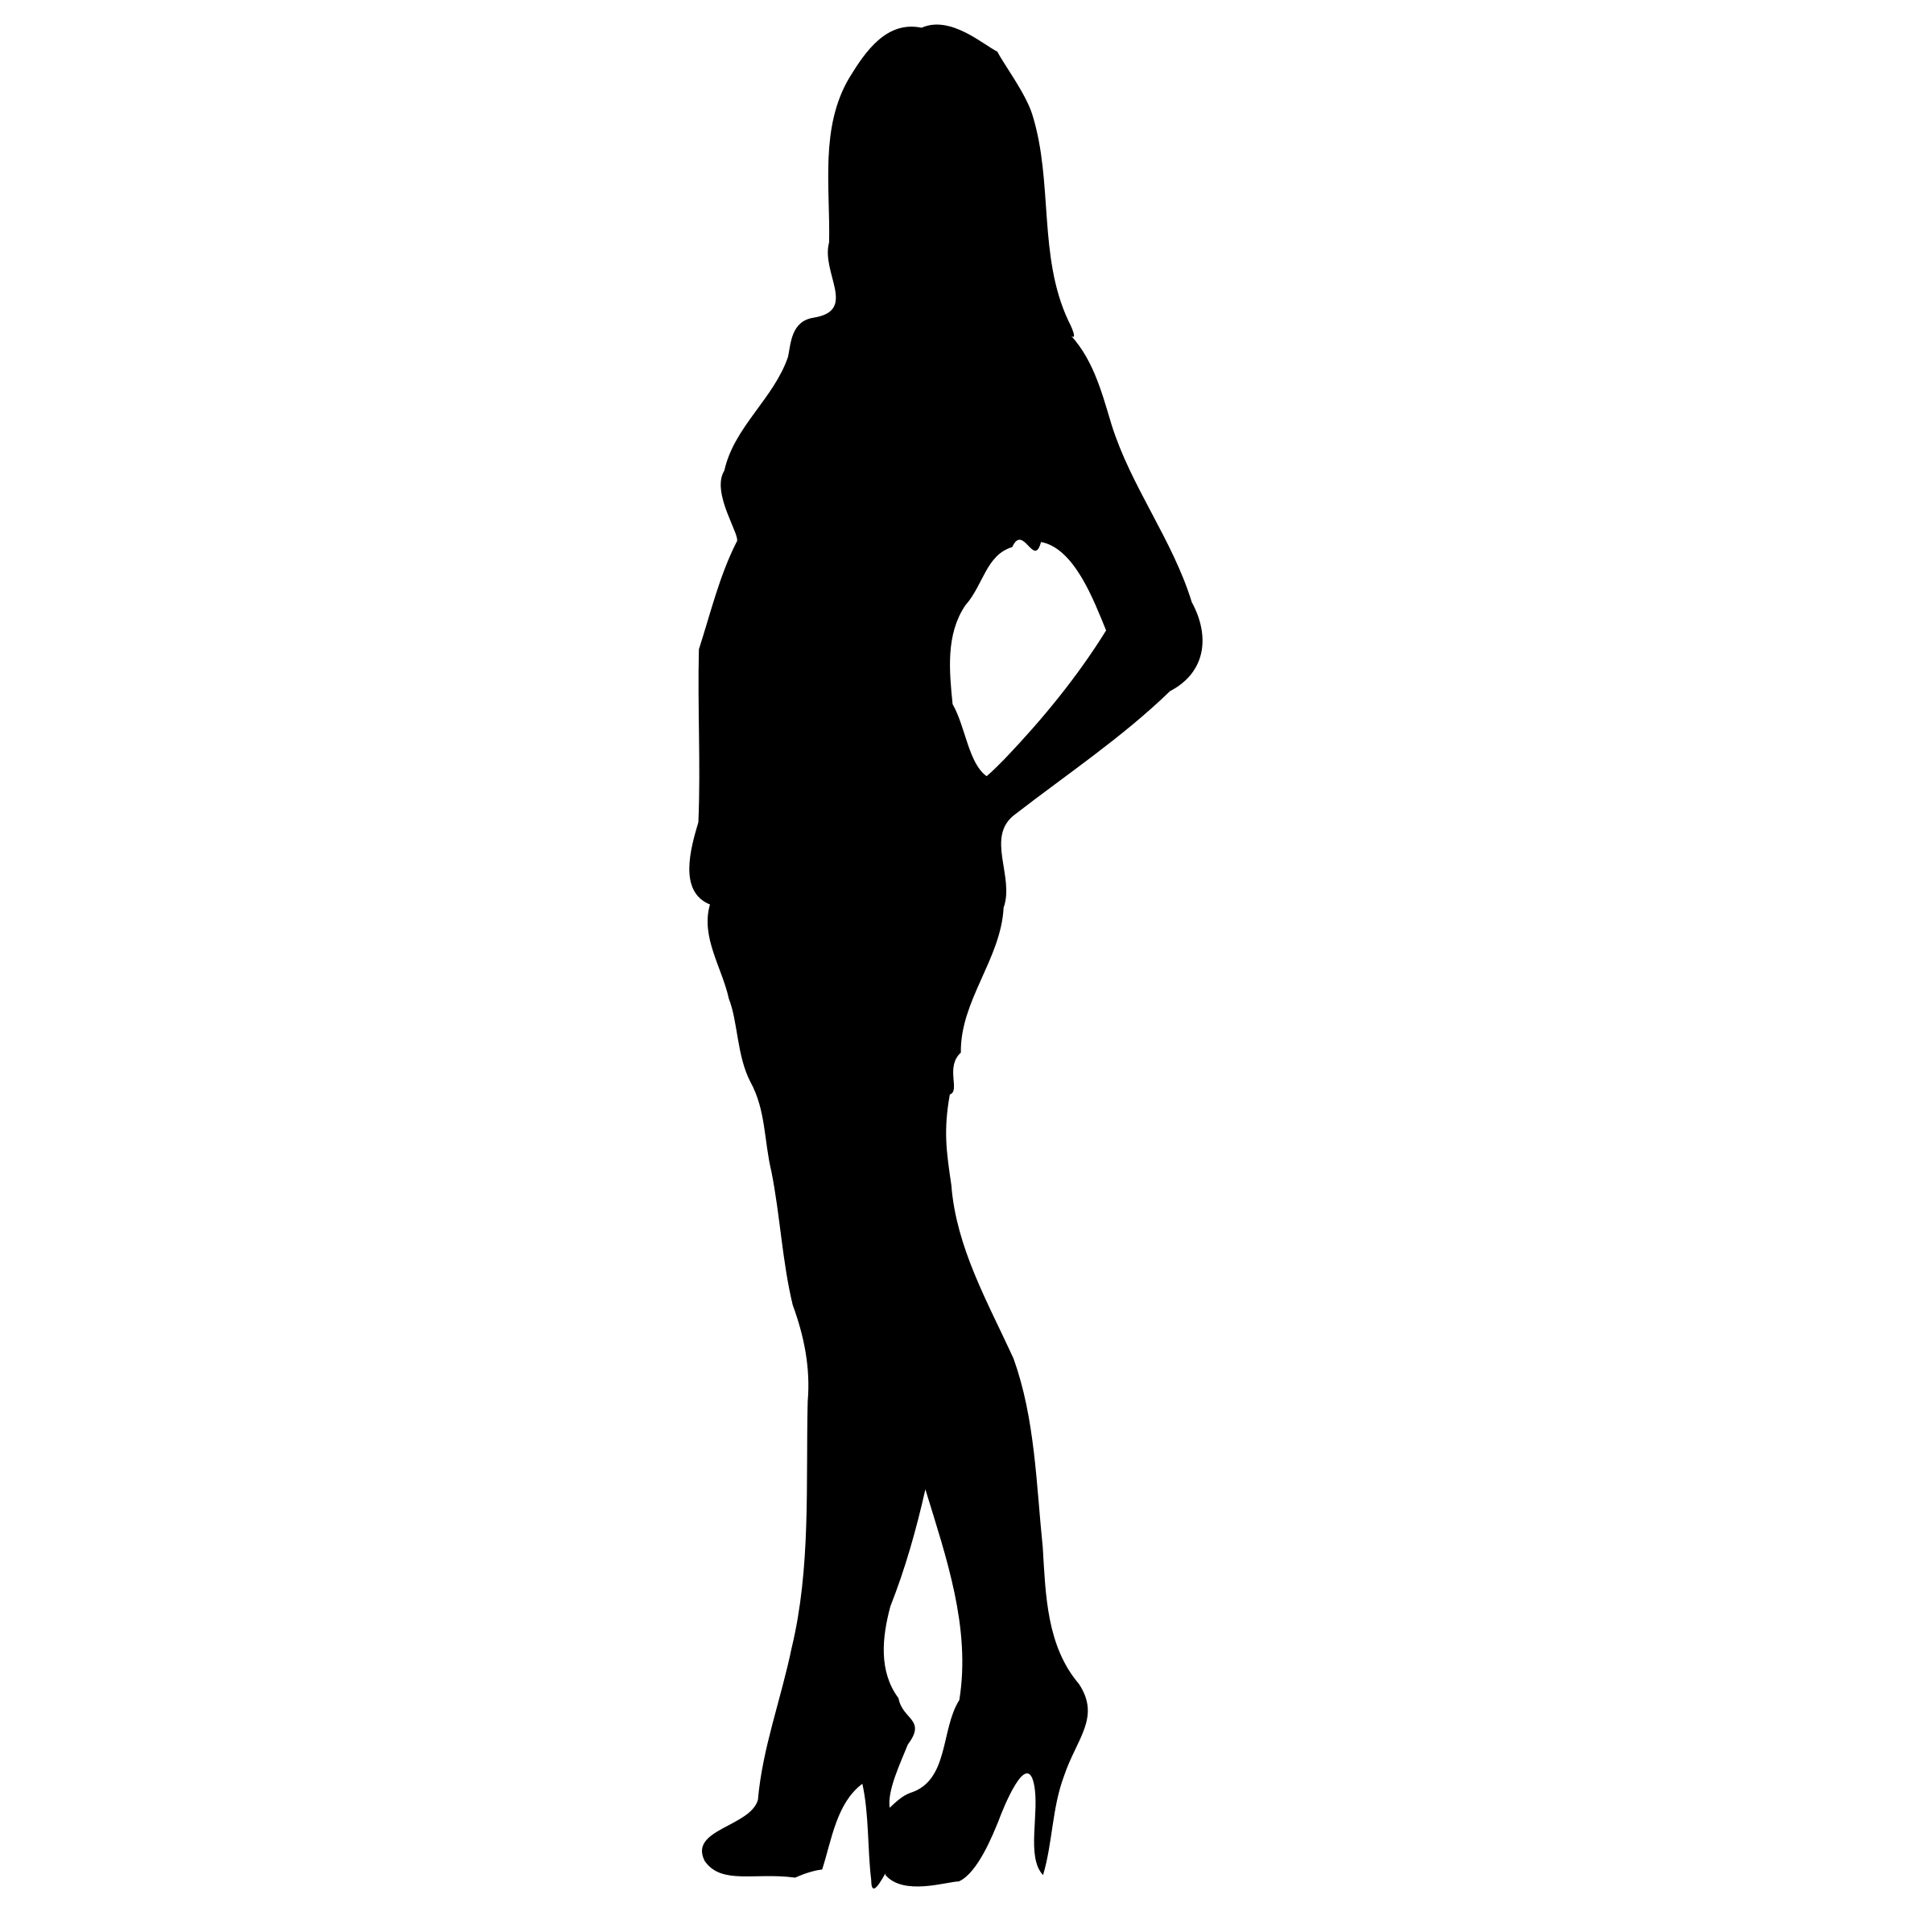 Clipboard silhouette